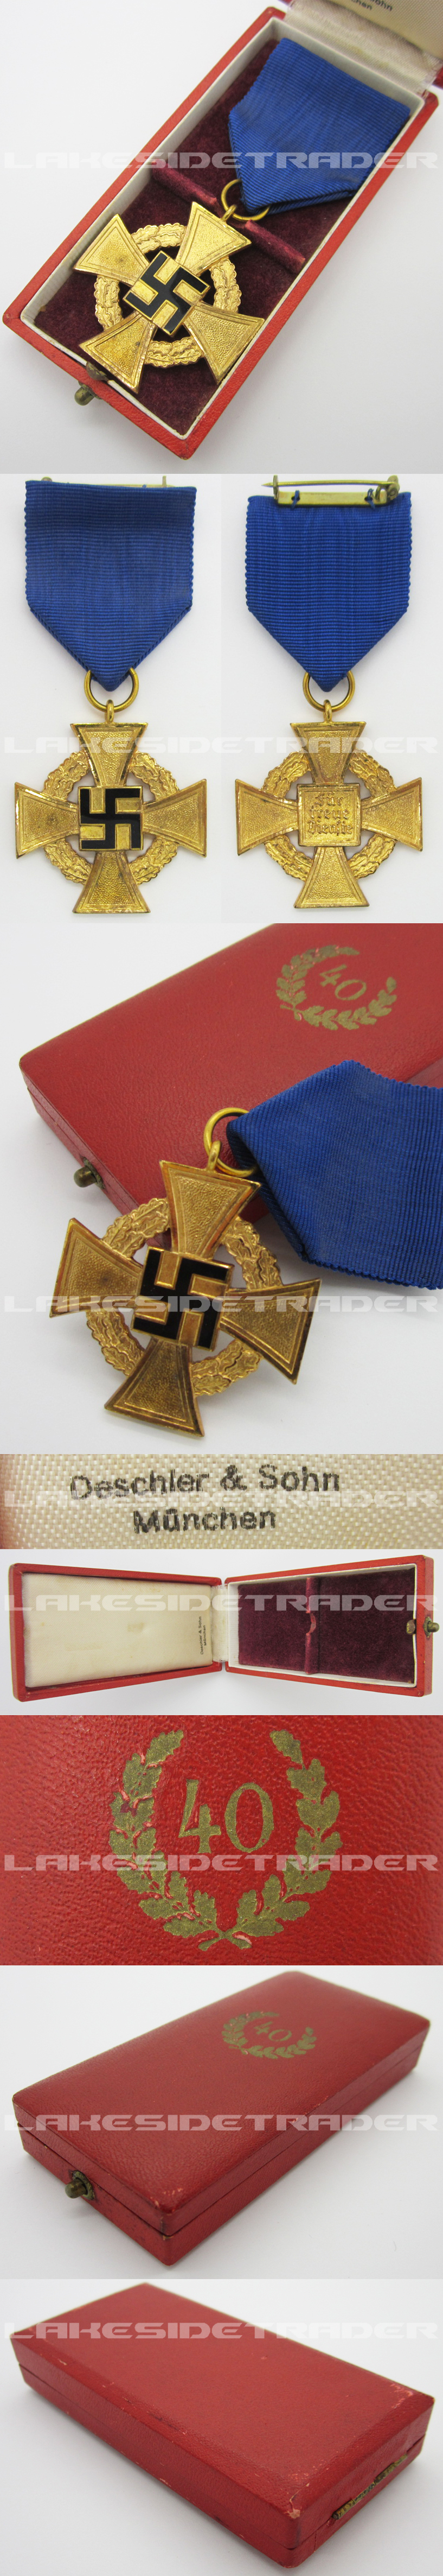 Cased 40 Year Faithful Service Cross